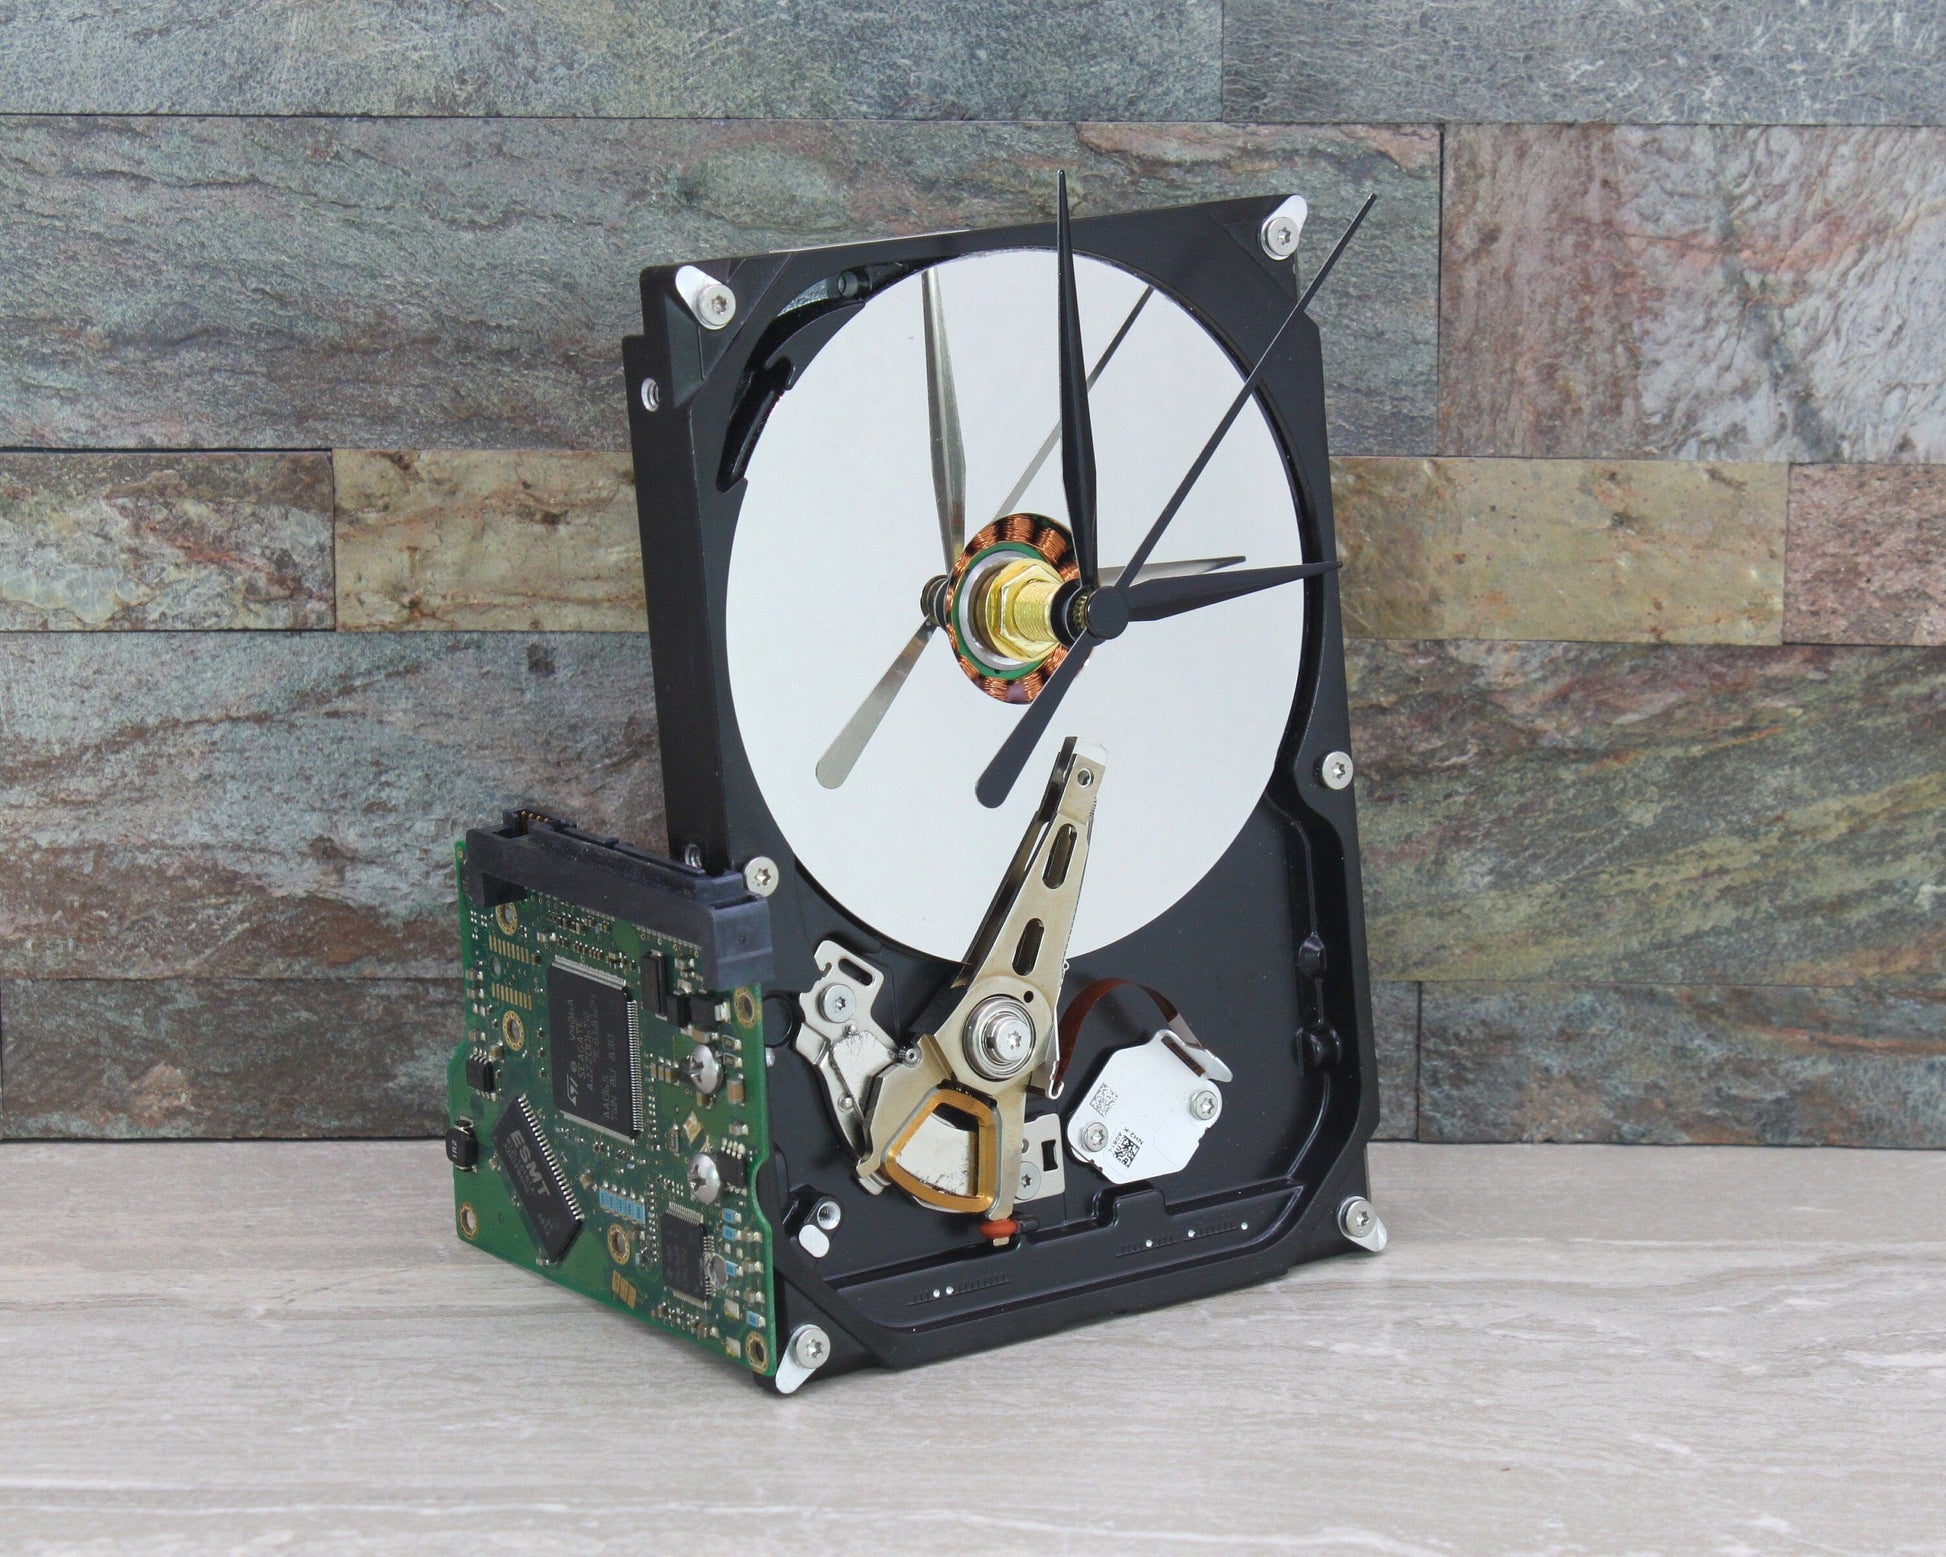 LightAndTimeArt Harddrive Clock Upcycled Slim Black & Silver Hard Drive Clock - Modern Desk Clock - Gift for geeks, nerds, office, IT, new job gift, industrial design